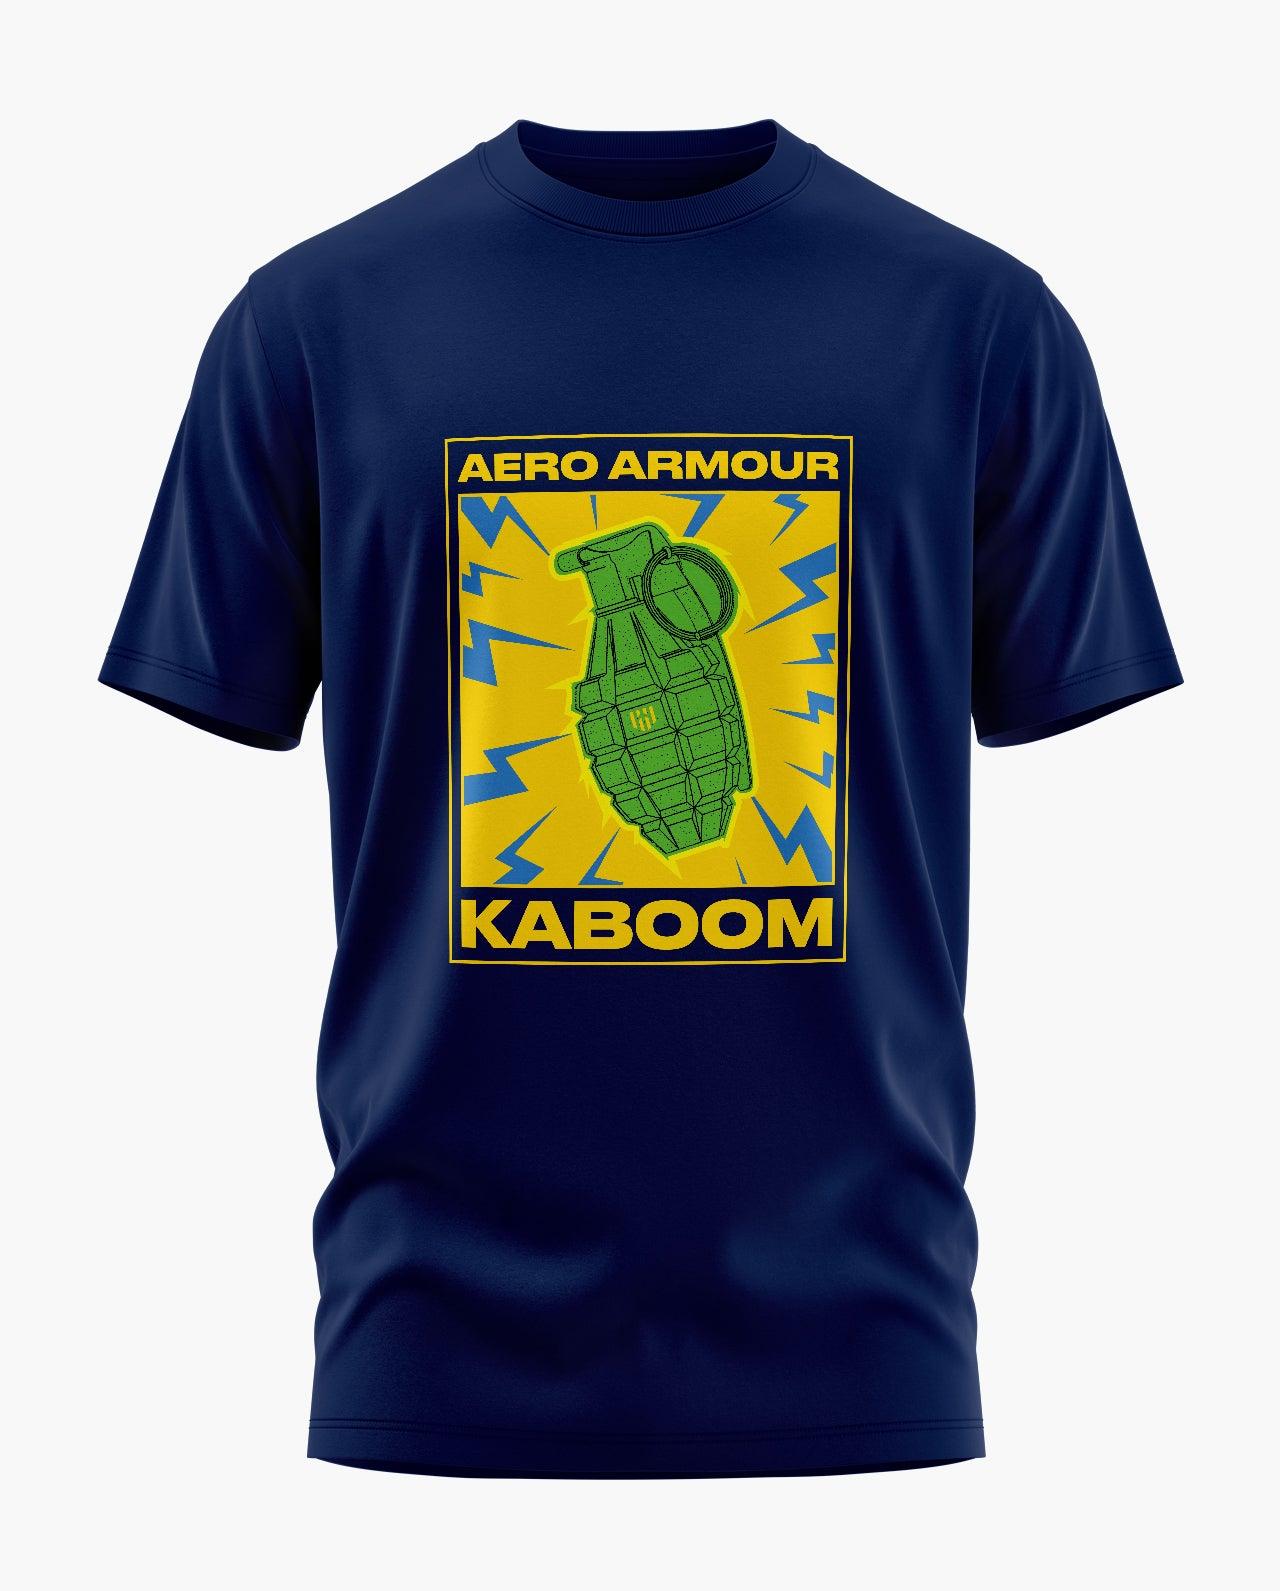 KABOOM T-Shirt - Aero Armour